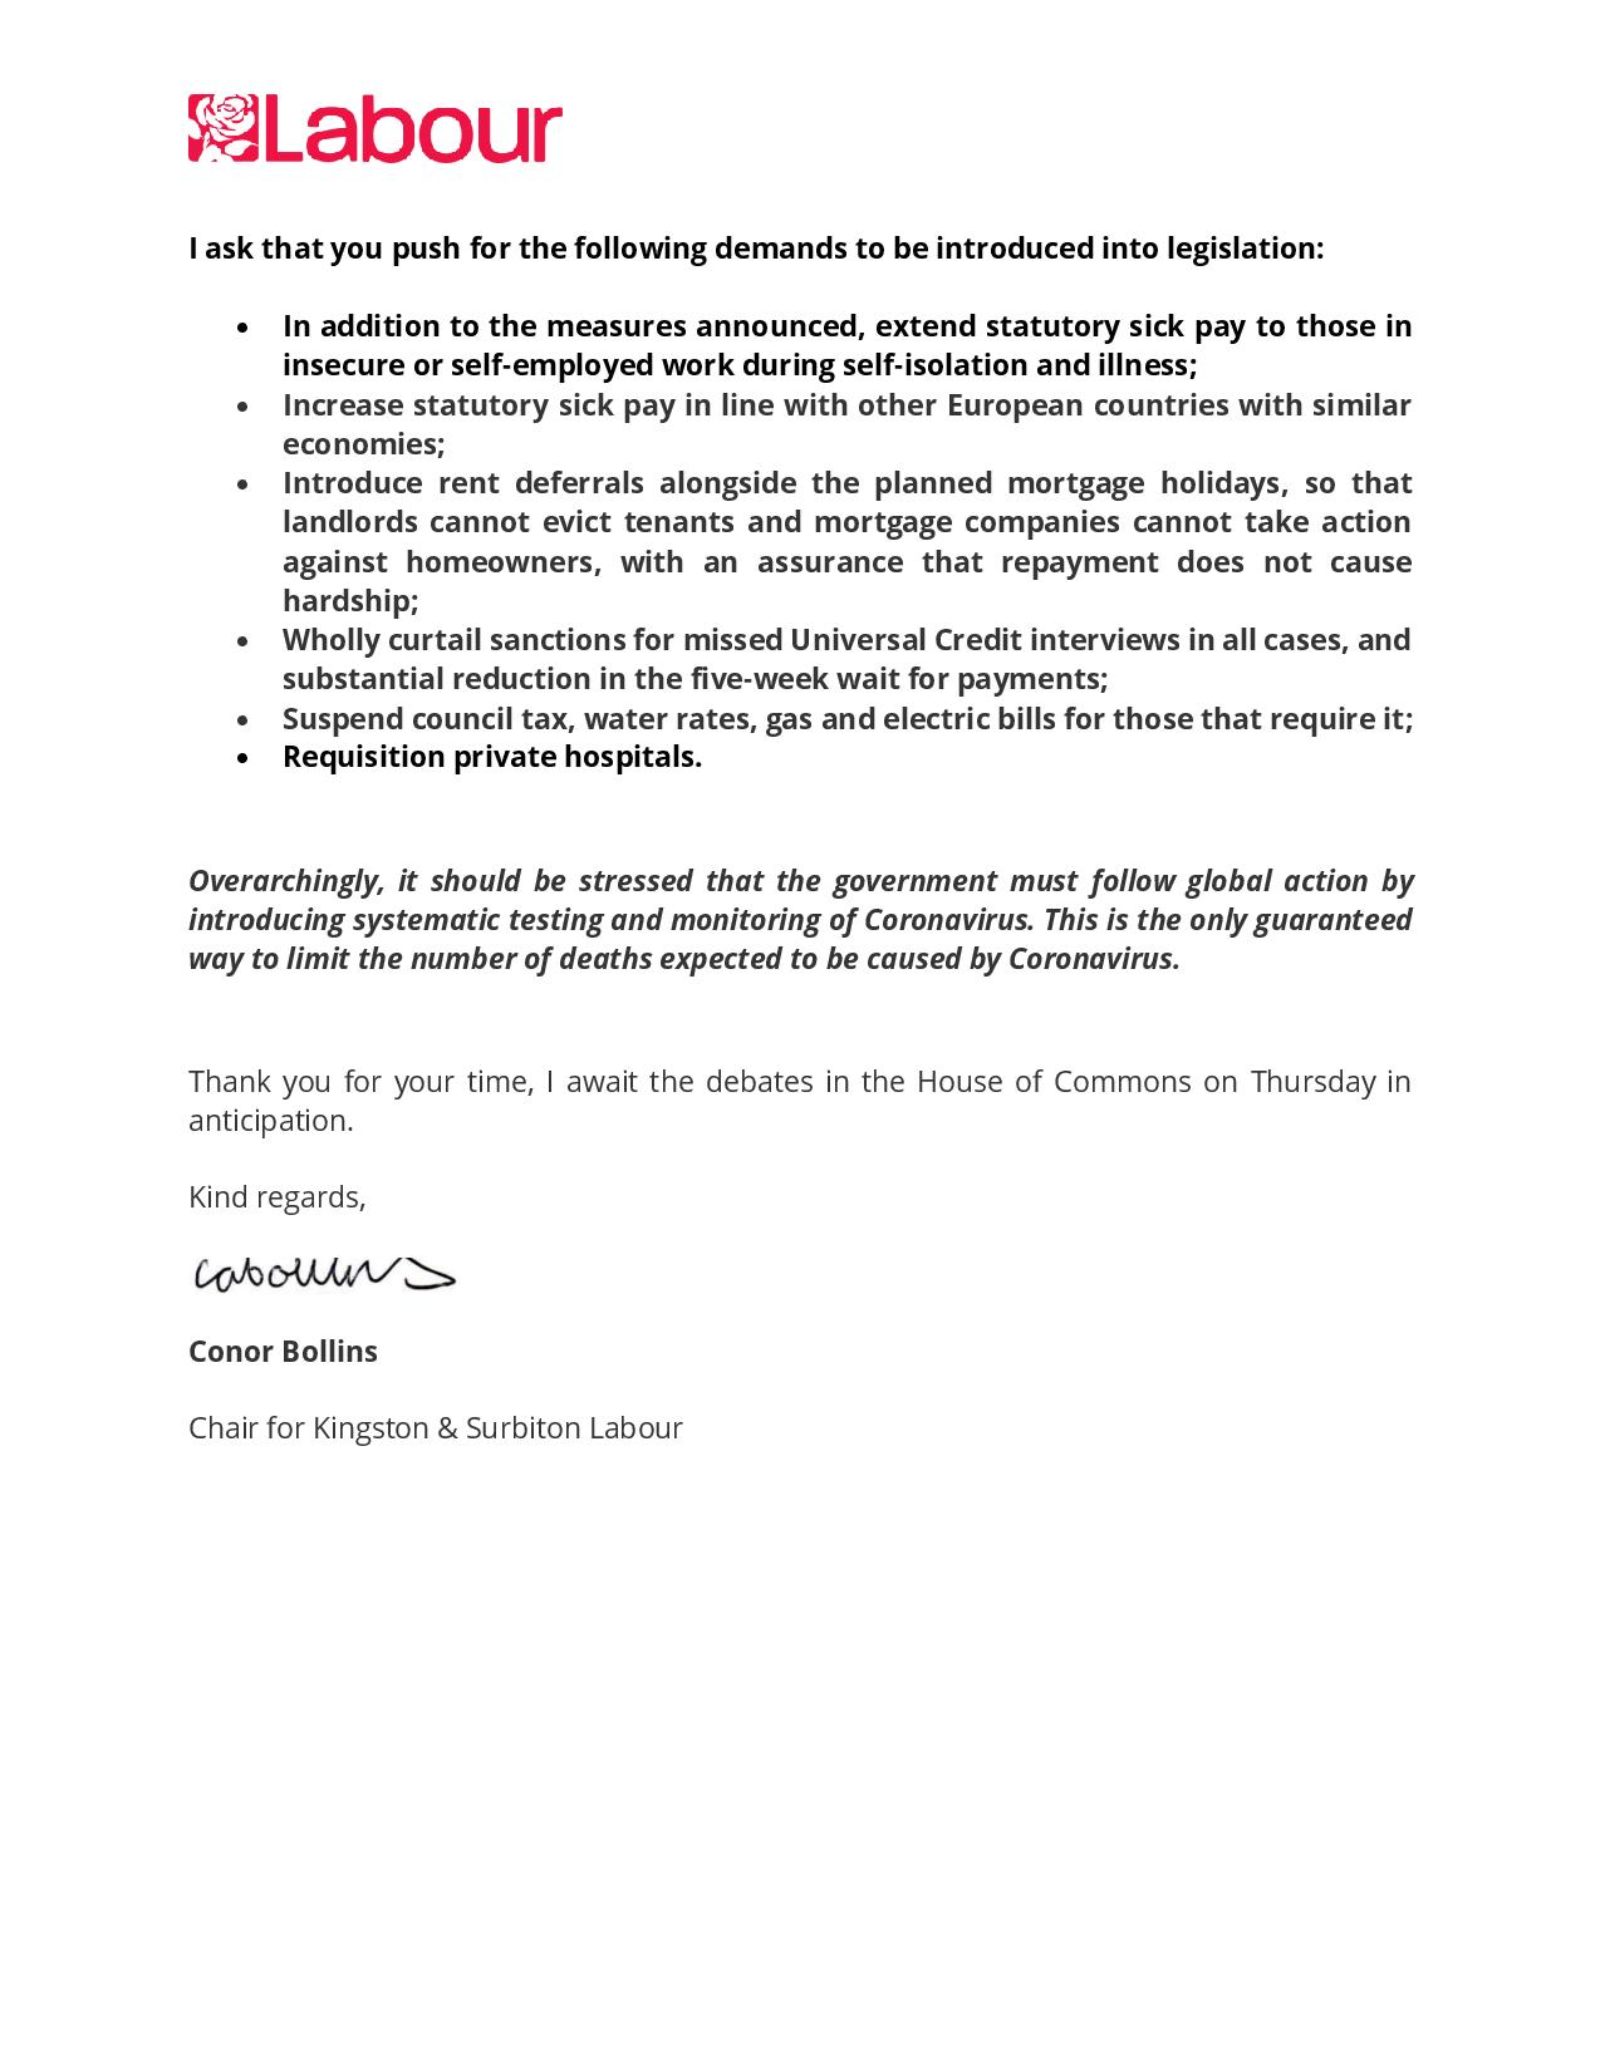 Letter to MP regarding Coronavirus Legislation